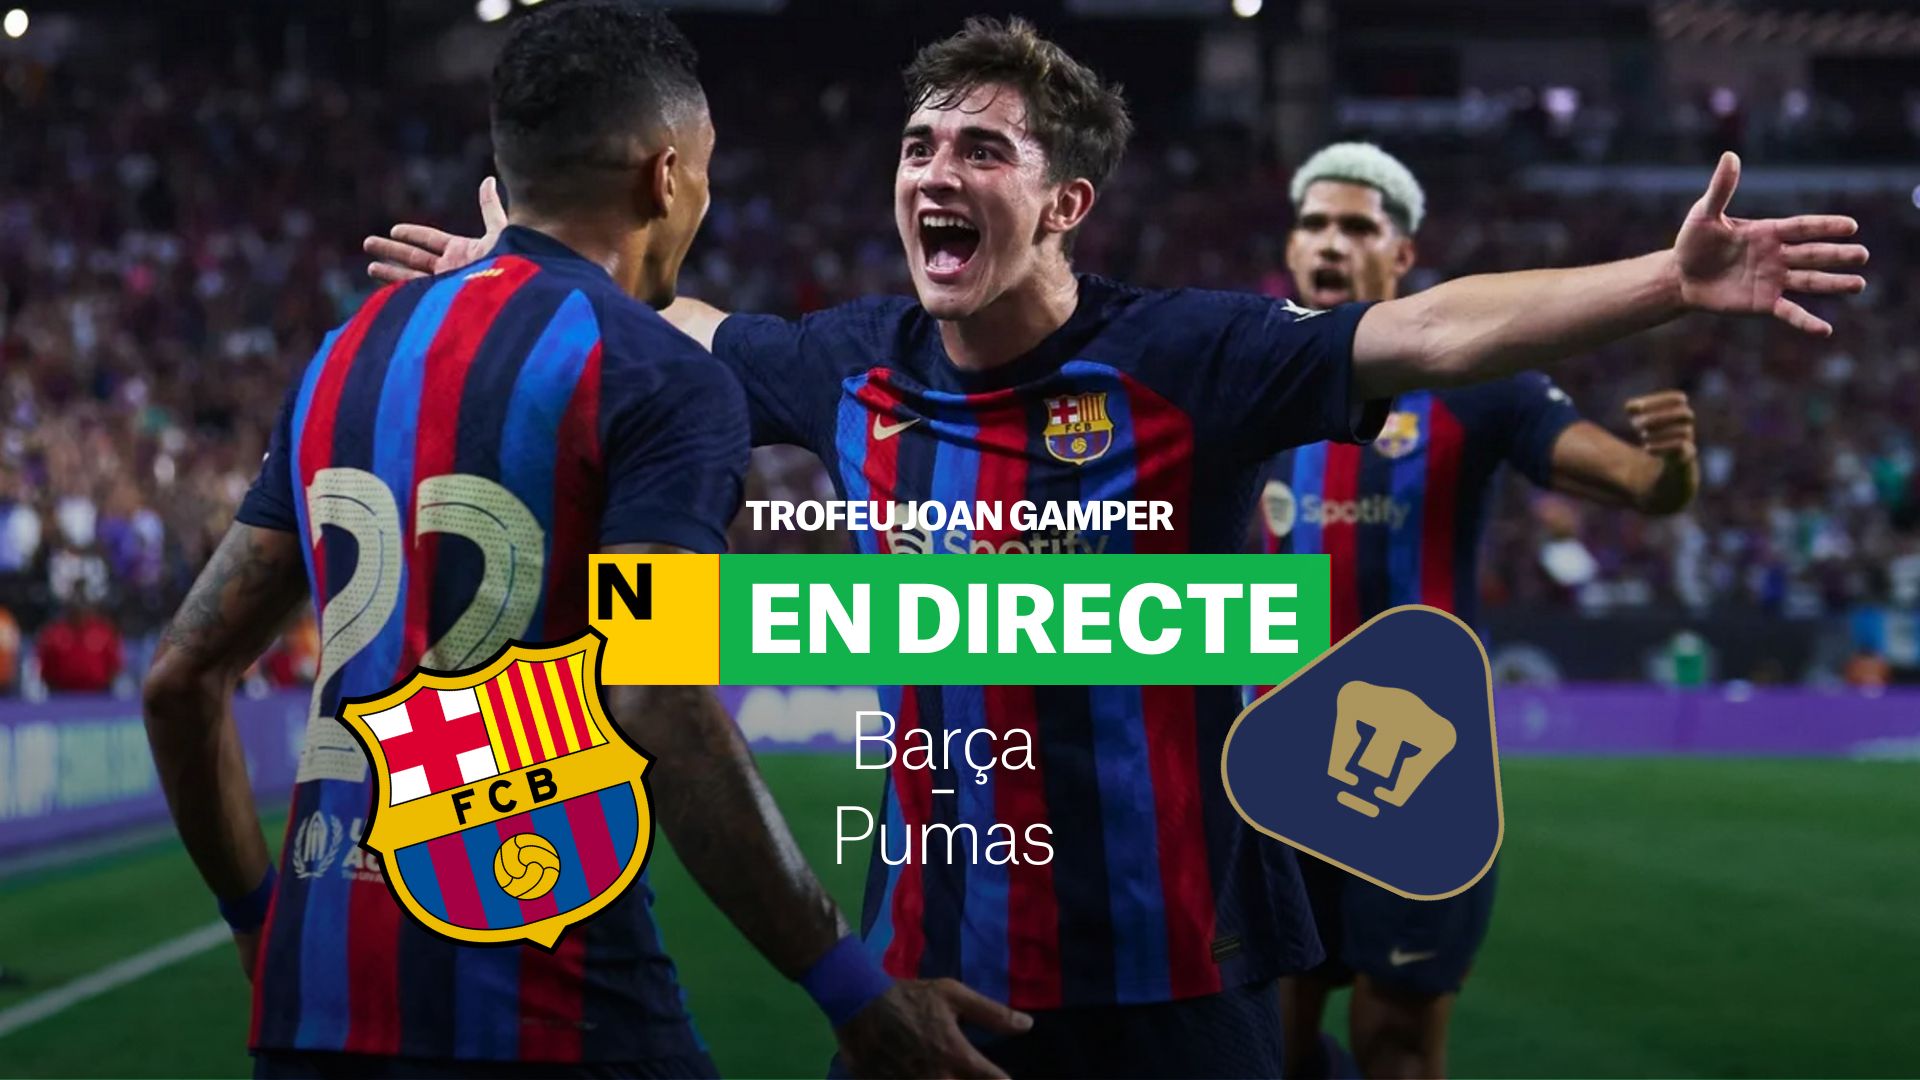 Barça-Pumas; Trofeu Joan Gamper 2022: resultat, resum i gols